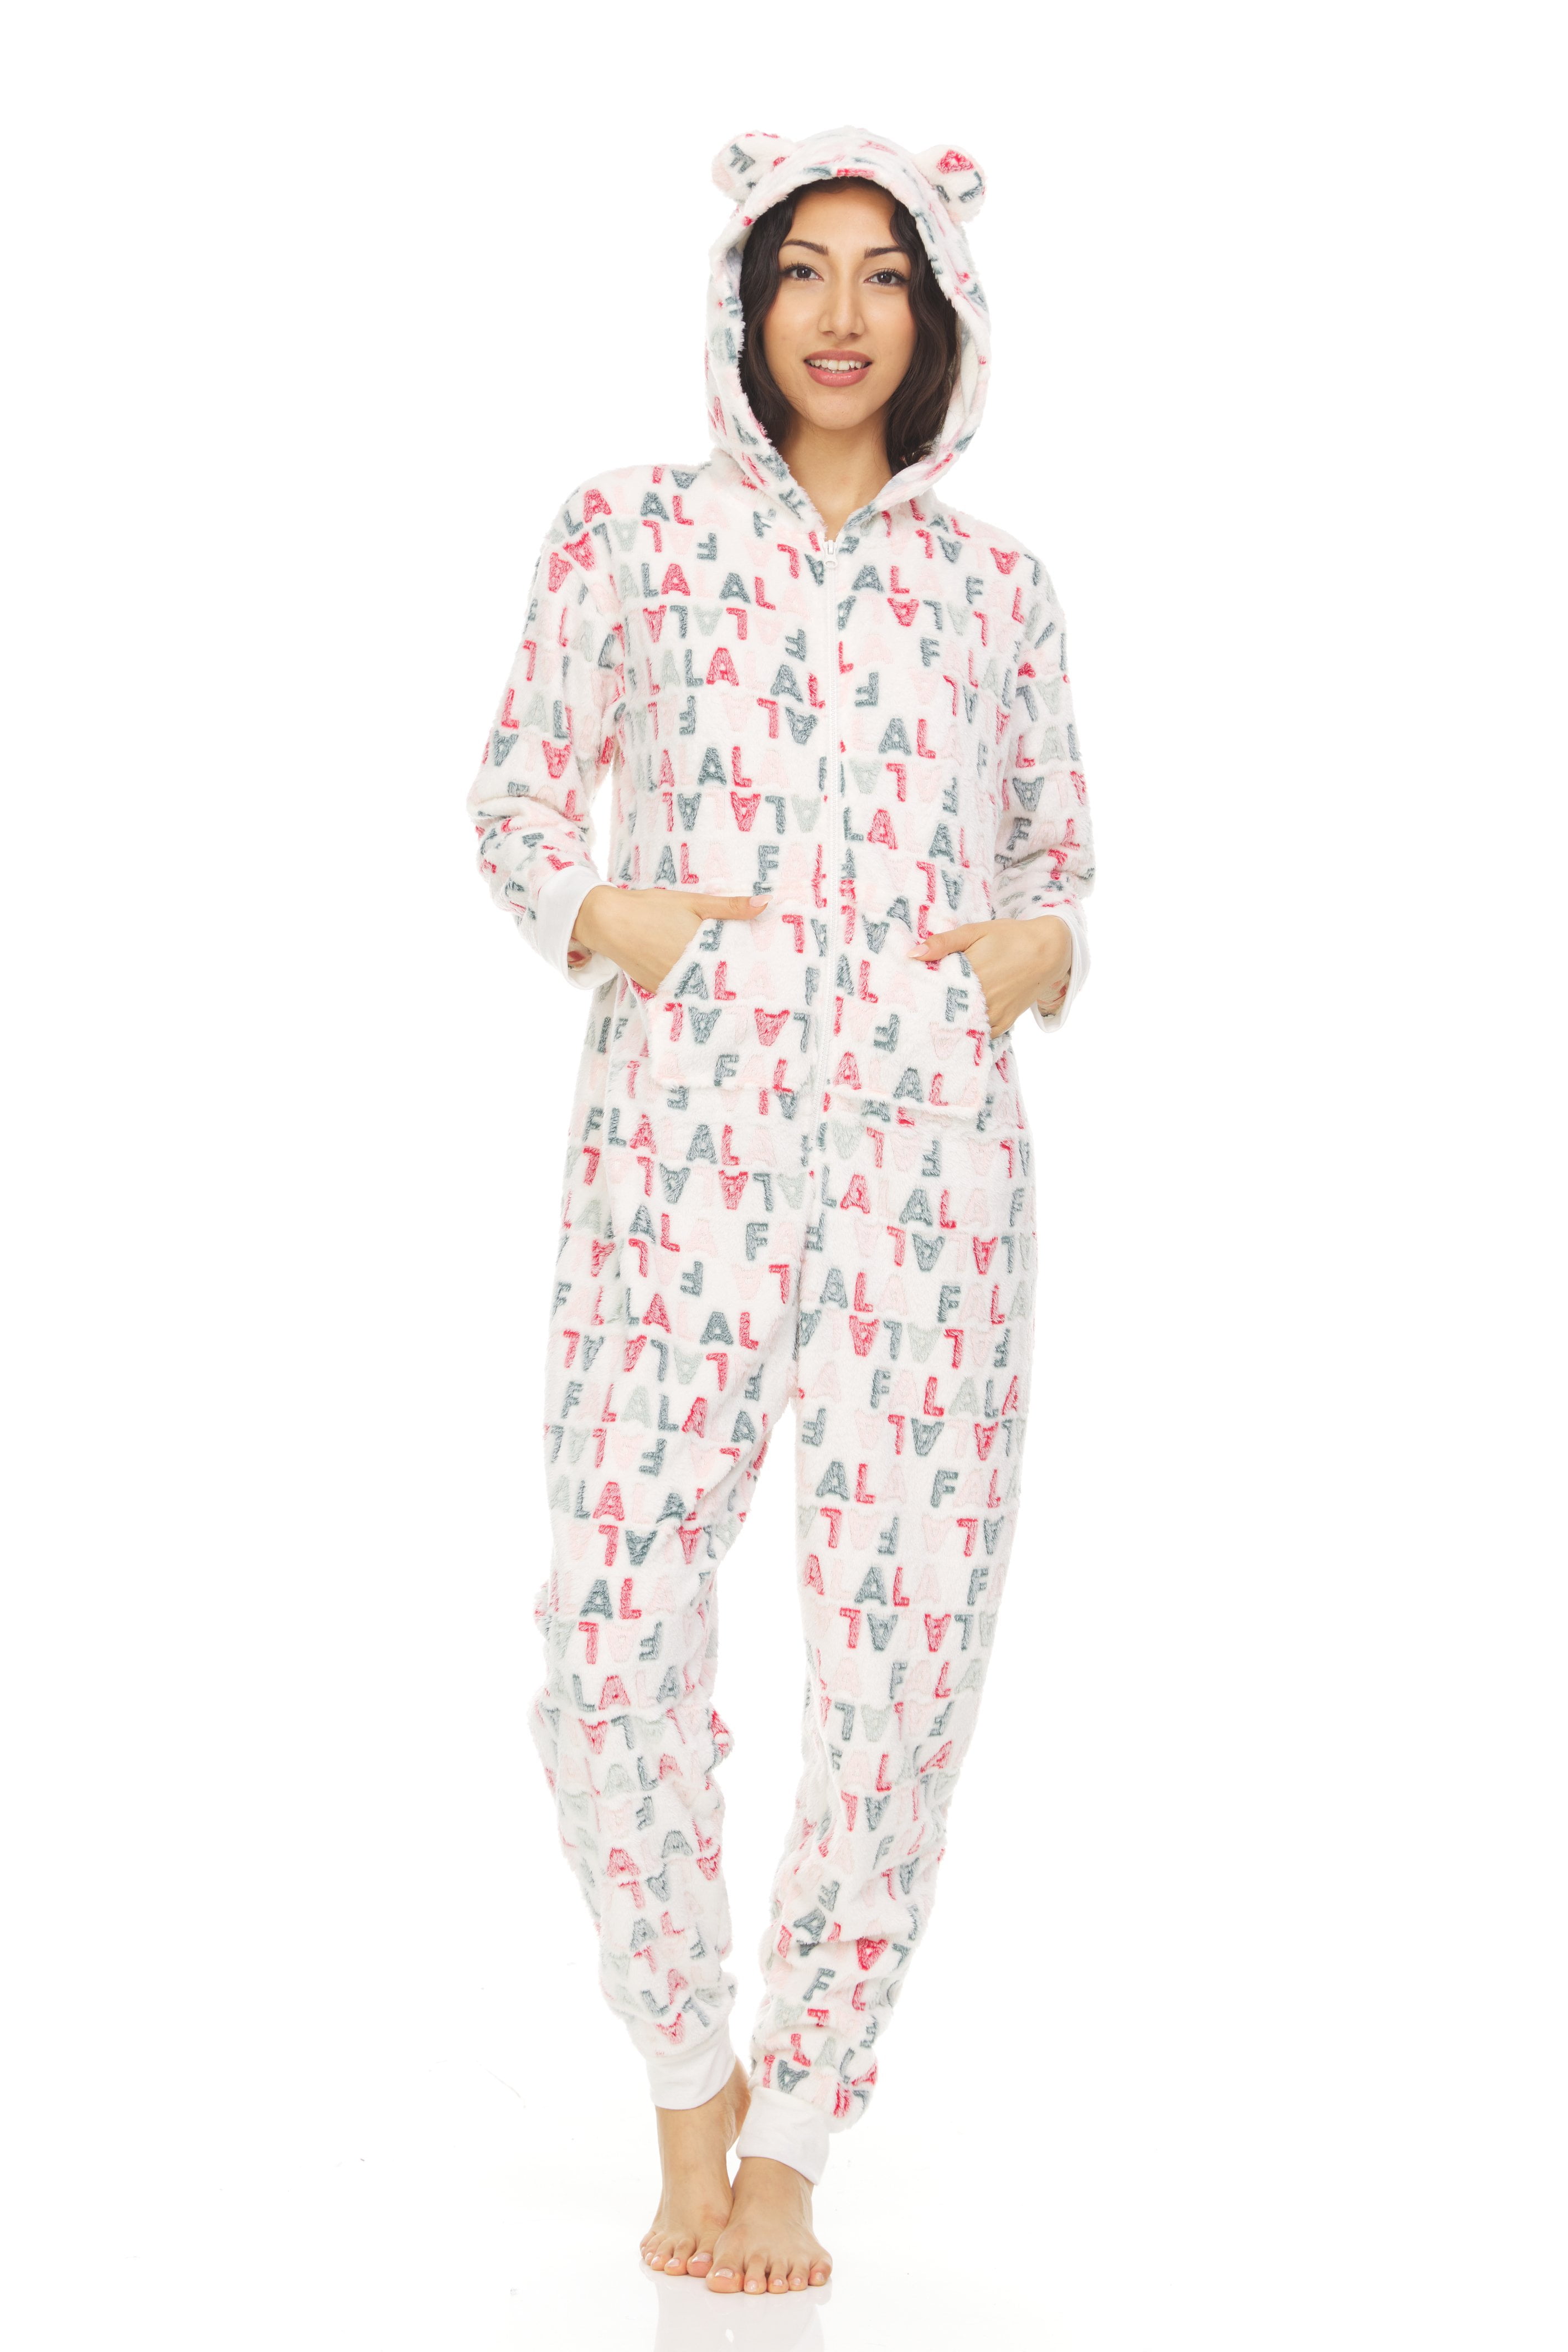  ZZXXB Bear Paw Print Onesie Pajamas for Adult Women